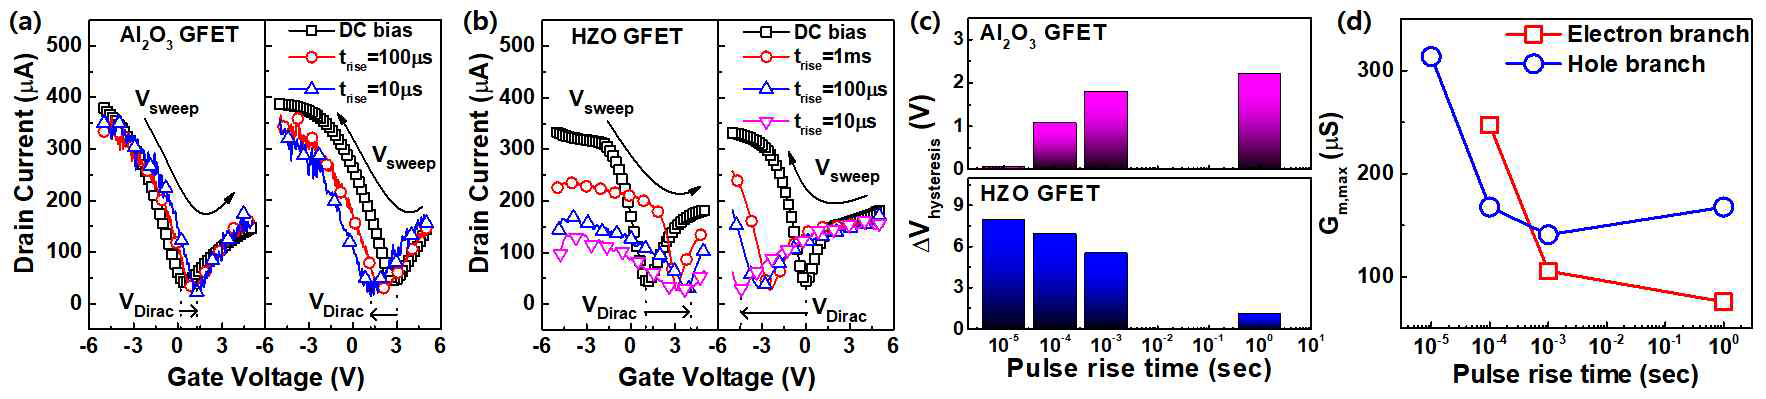 (a) Al2O3 그래핀 FET 소자 (b) HZO 그래핀 FET 소자의 Pulse I-V curve (c) pulse rise time에 따른 각 소자의 △Vdirac 변화 (d) pulse rise time에 따른 tranceconductance 변화